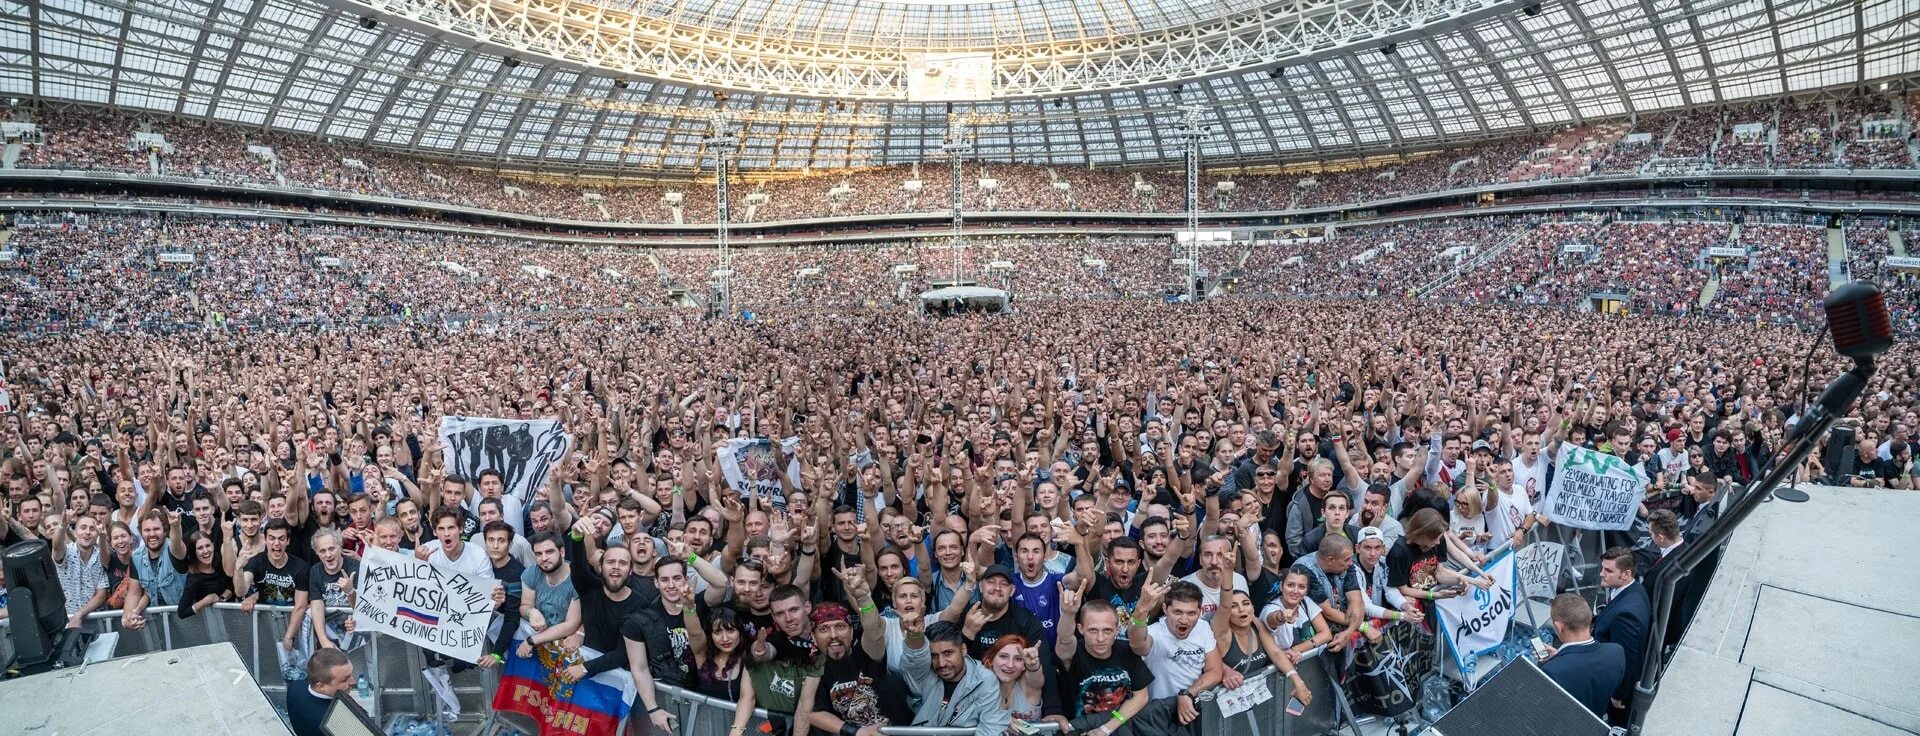 26 август 2019. Металлика в Лужниках. Концерт металлика в Москве в Лужниках 2019. Metallica Лужники. Металлика в Лужниках 2007.